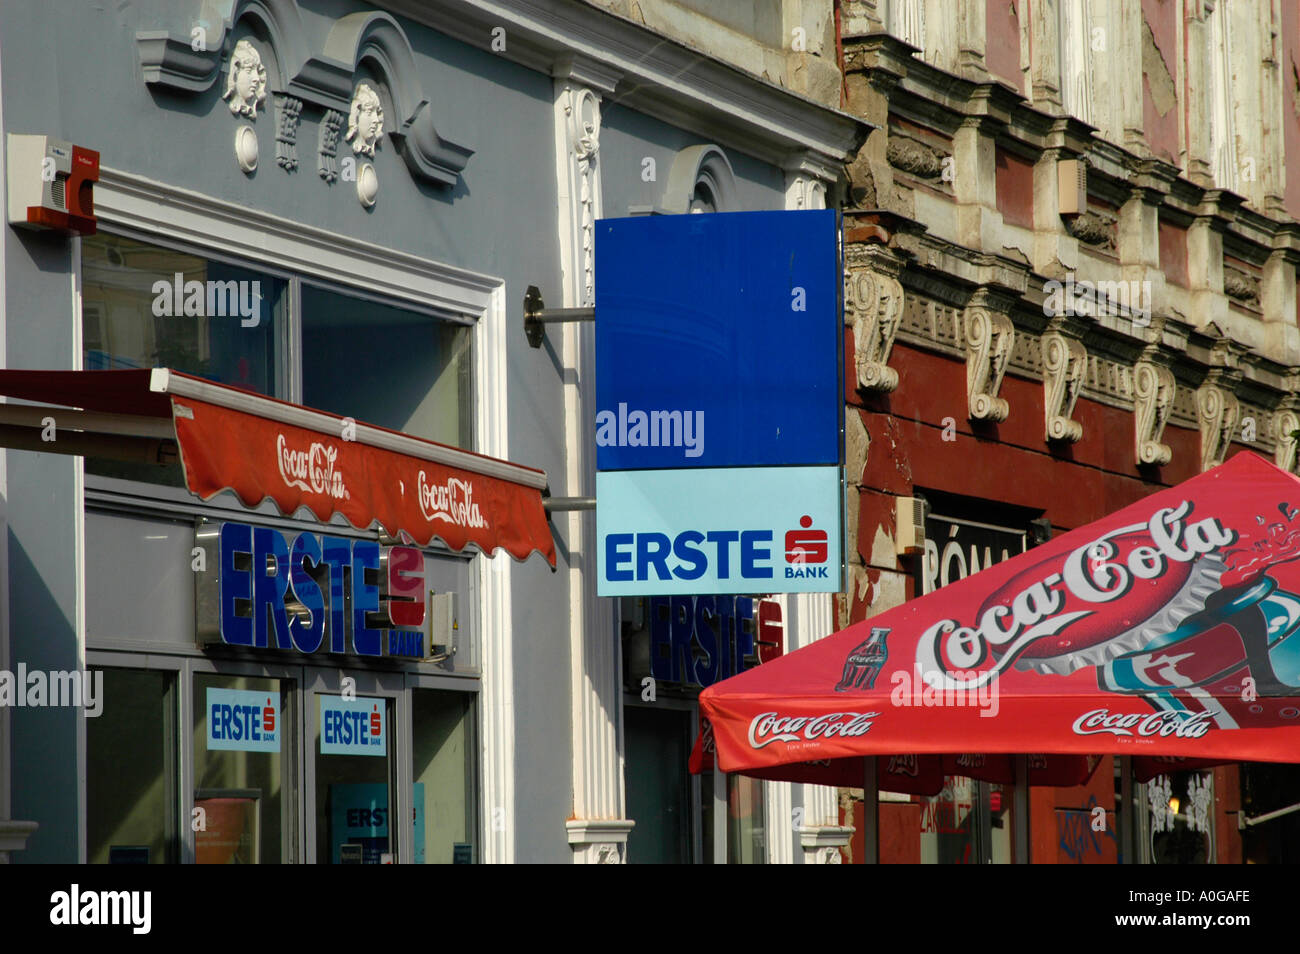 Erste Bank, Coca Cola in Hungary Stock Photo - Alamy